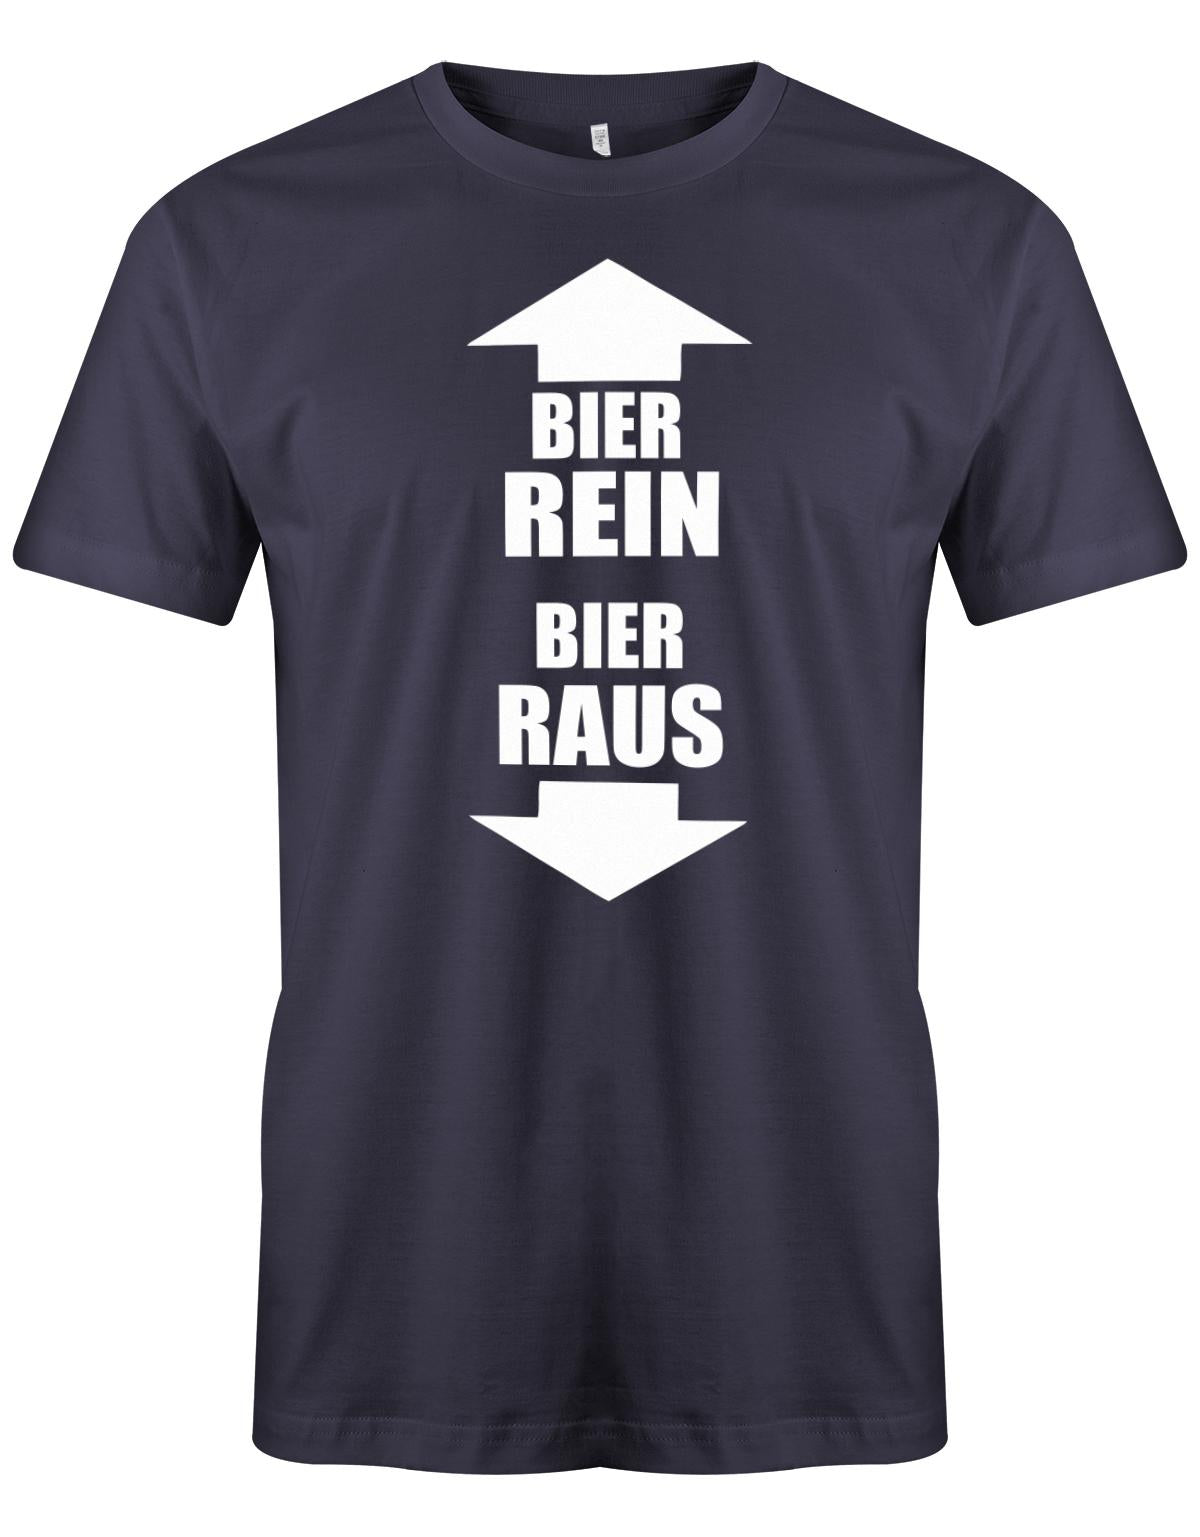 Bier-rein-Bier-raus-Bier-Shirt-Herren-Navy